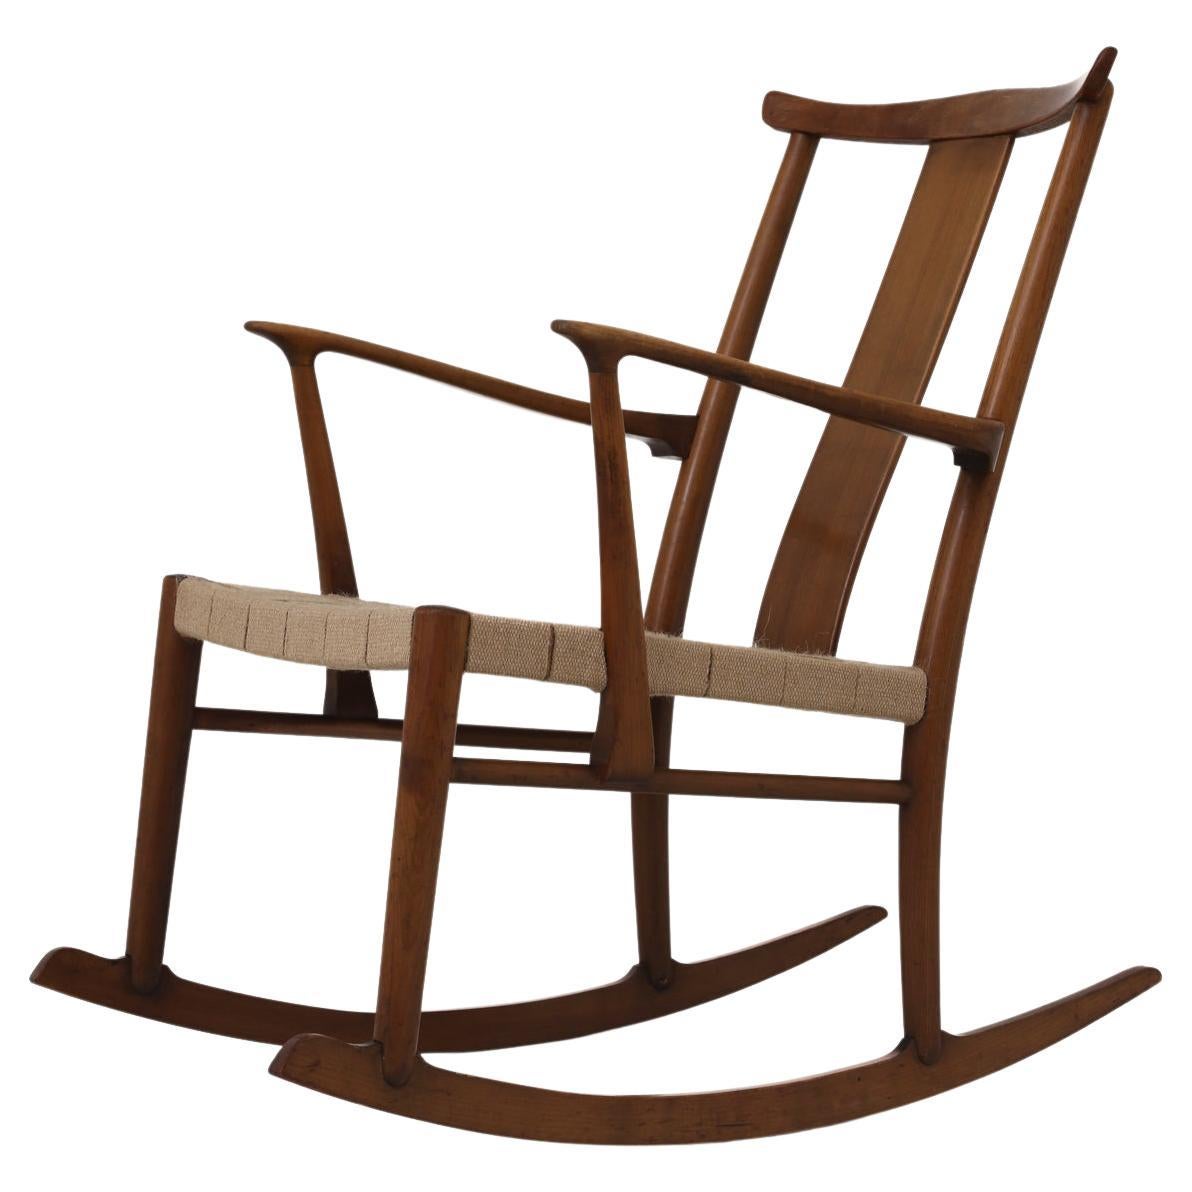 Rocking chair by Axel O. Larsen